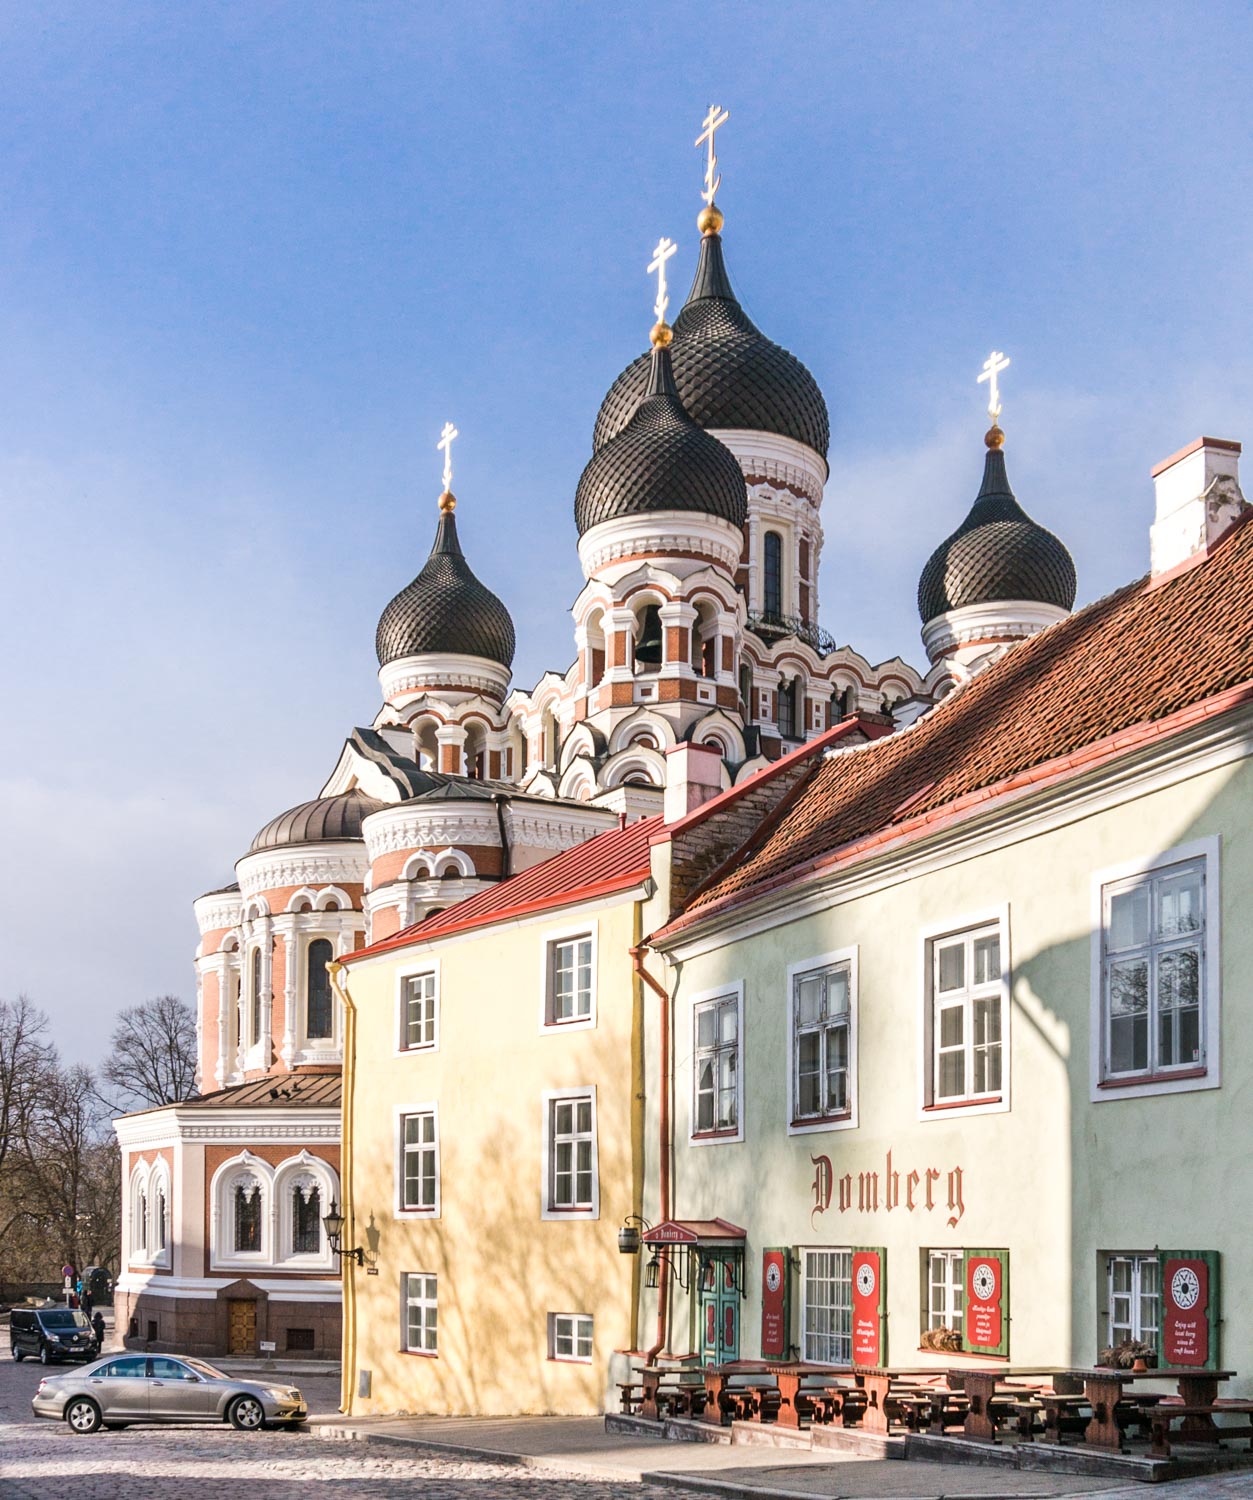 Easter in the Baltics – Tallinn day 1